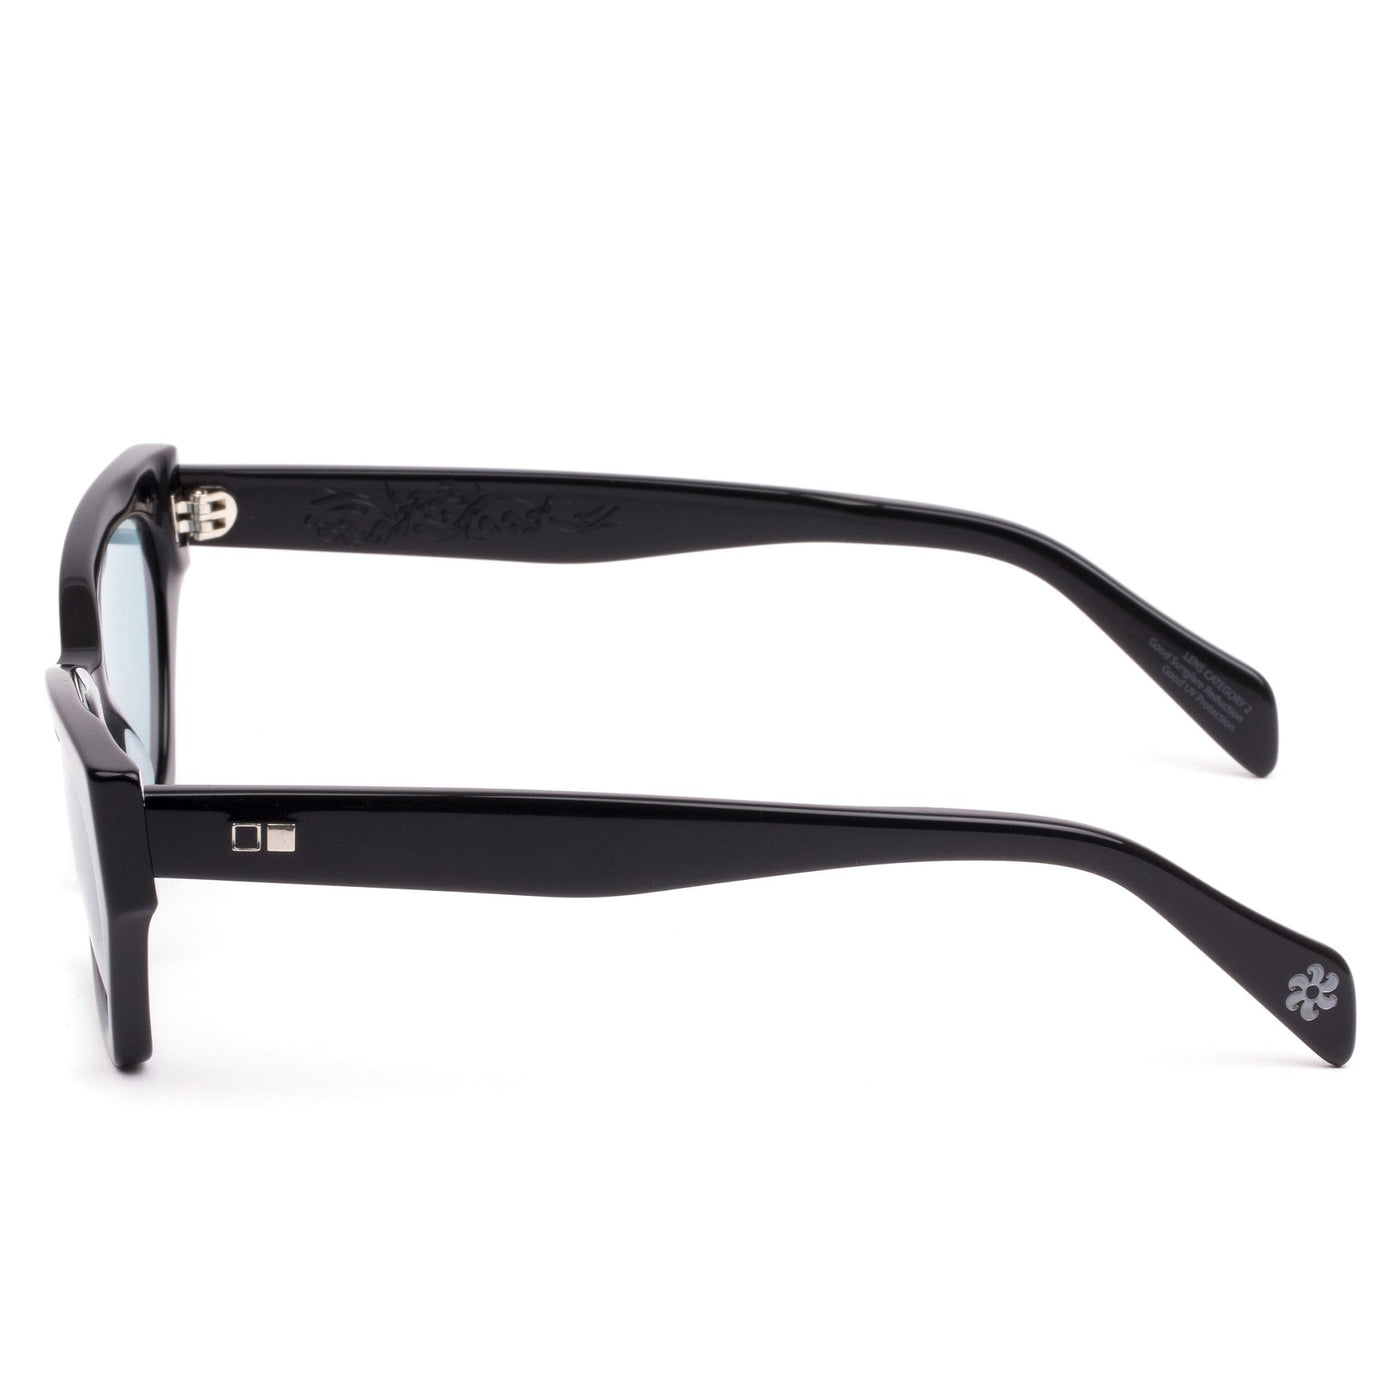 Black scratch resistant sunglasses with blue trans lenses